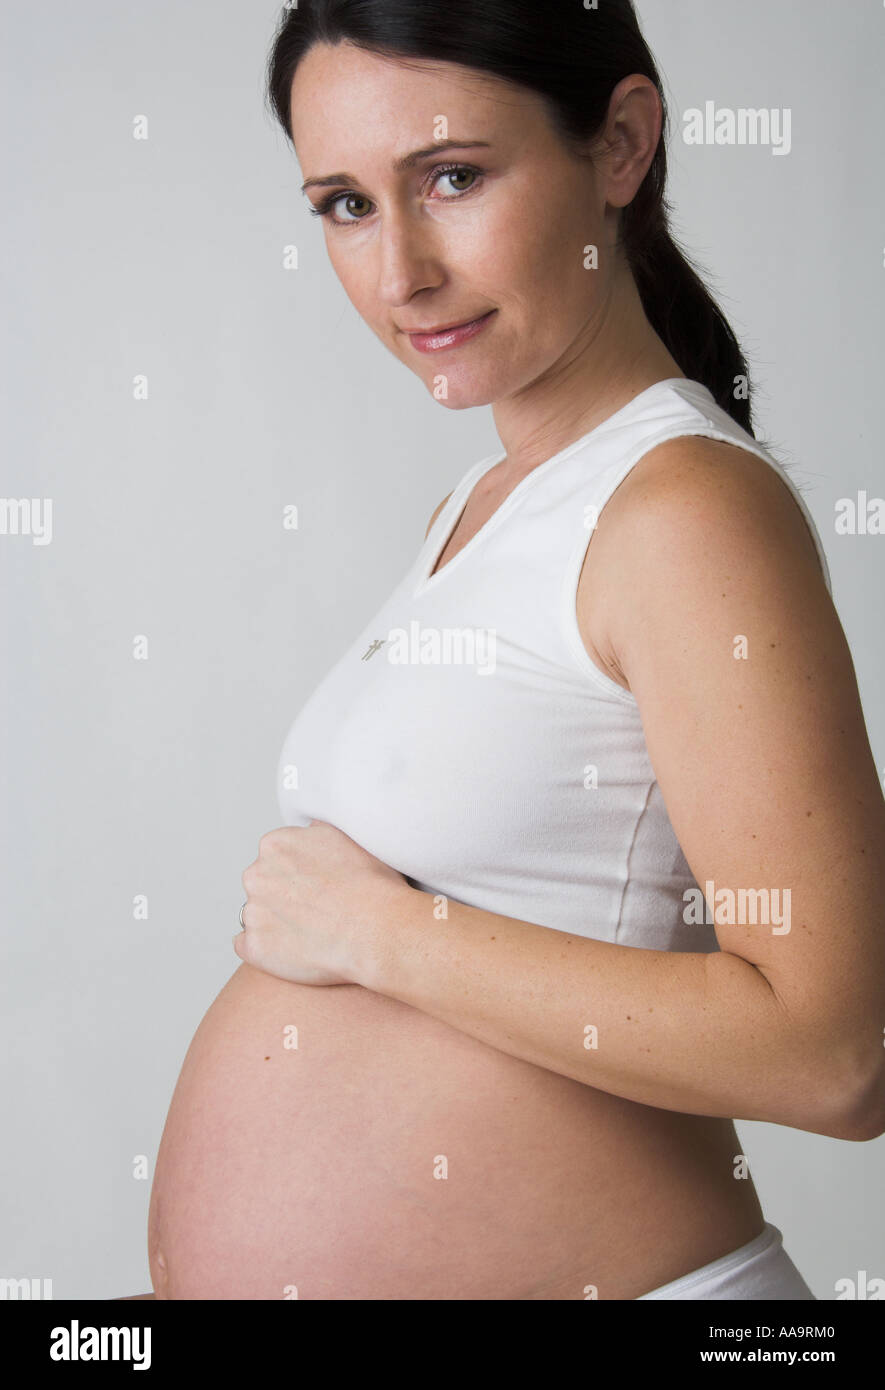 Pregnant Woman Wearing a White Top Stock Photo